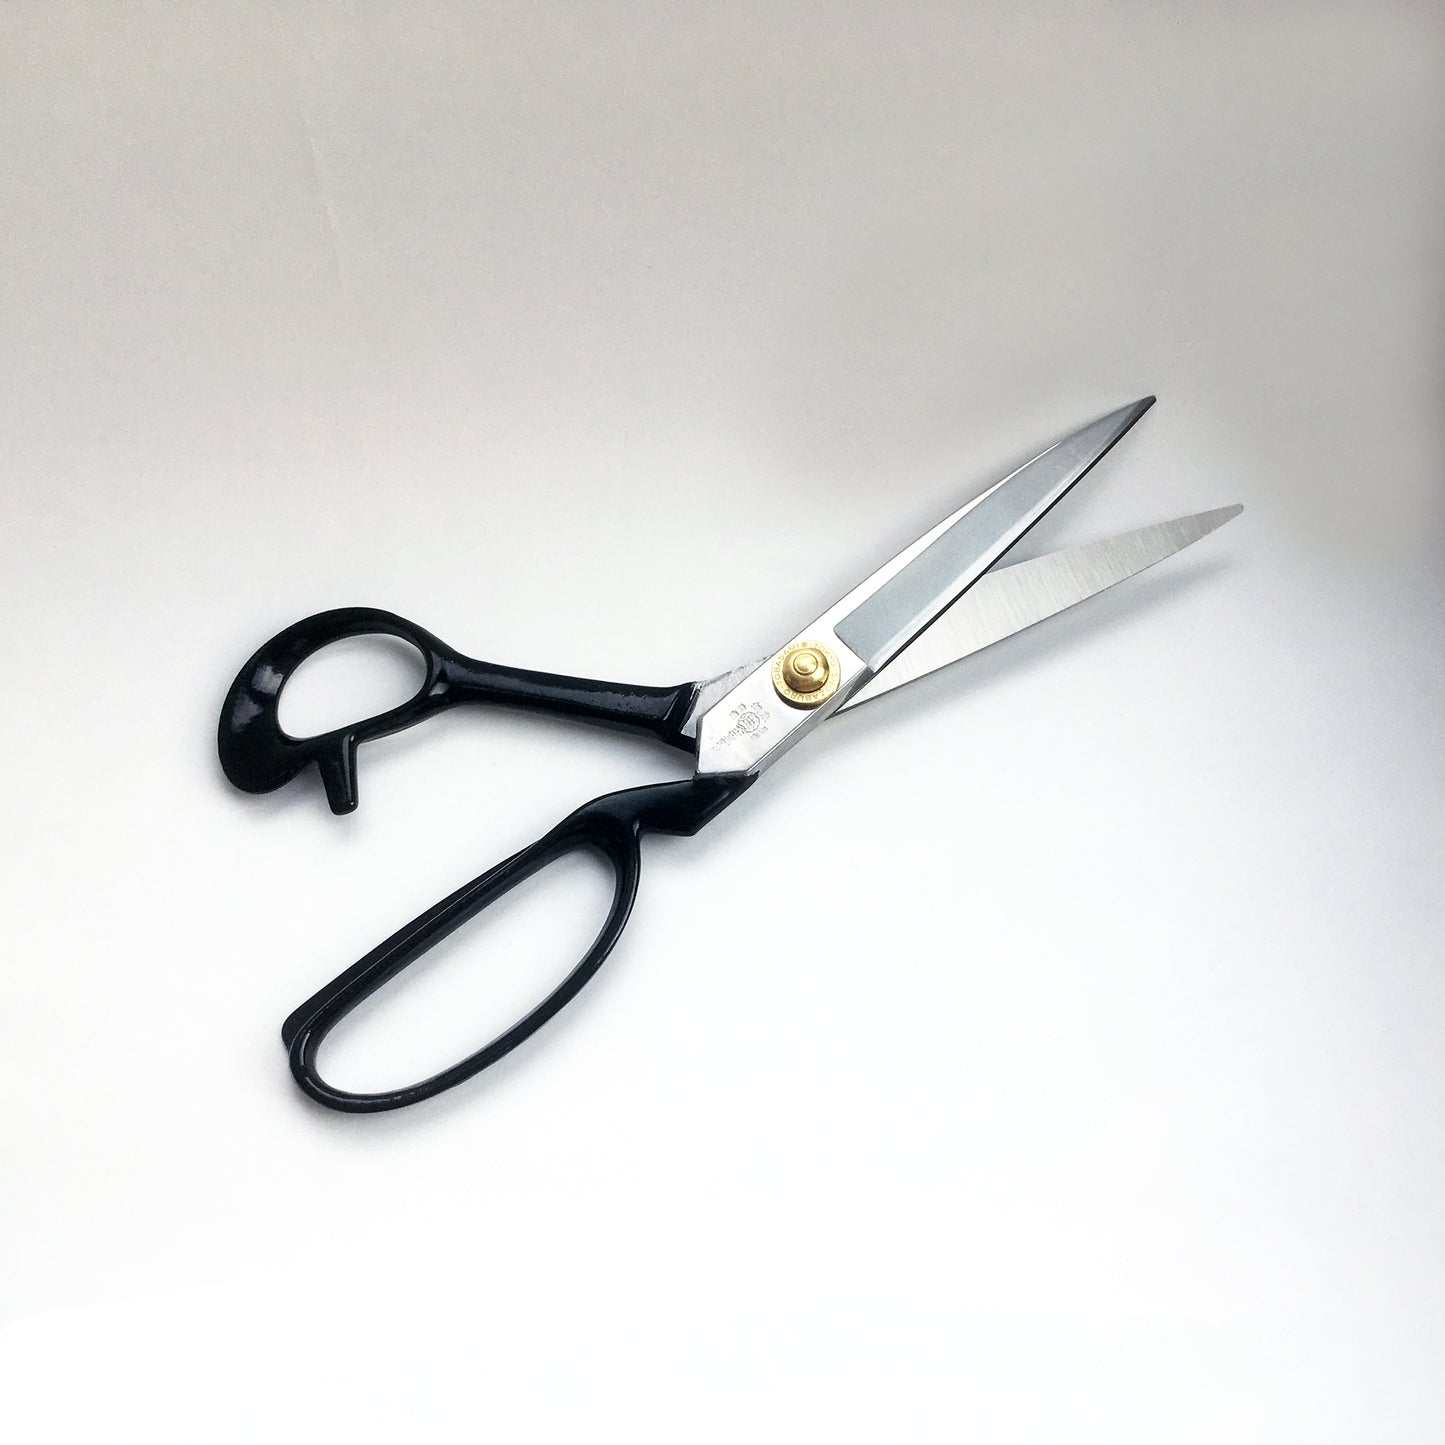 Shozaburo Japanese scissors in size 24cm